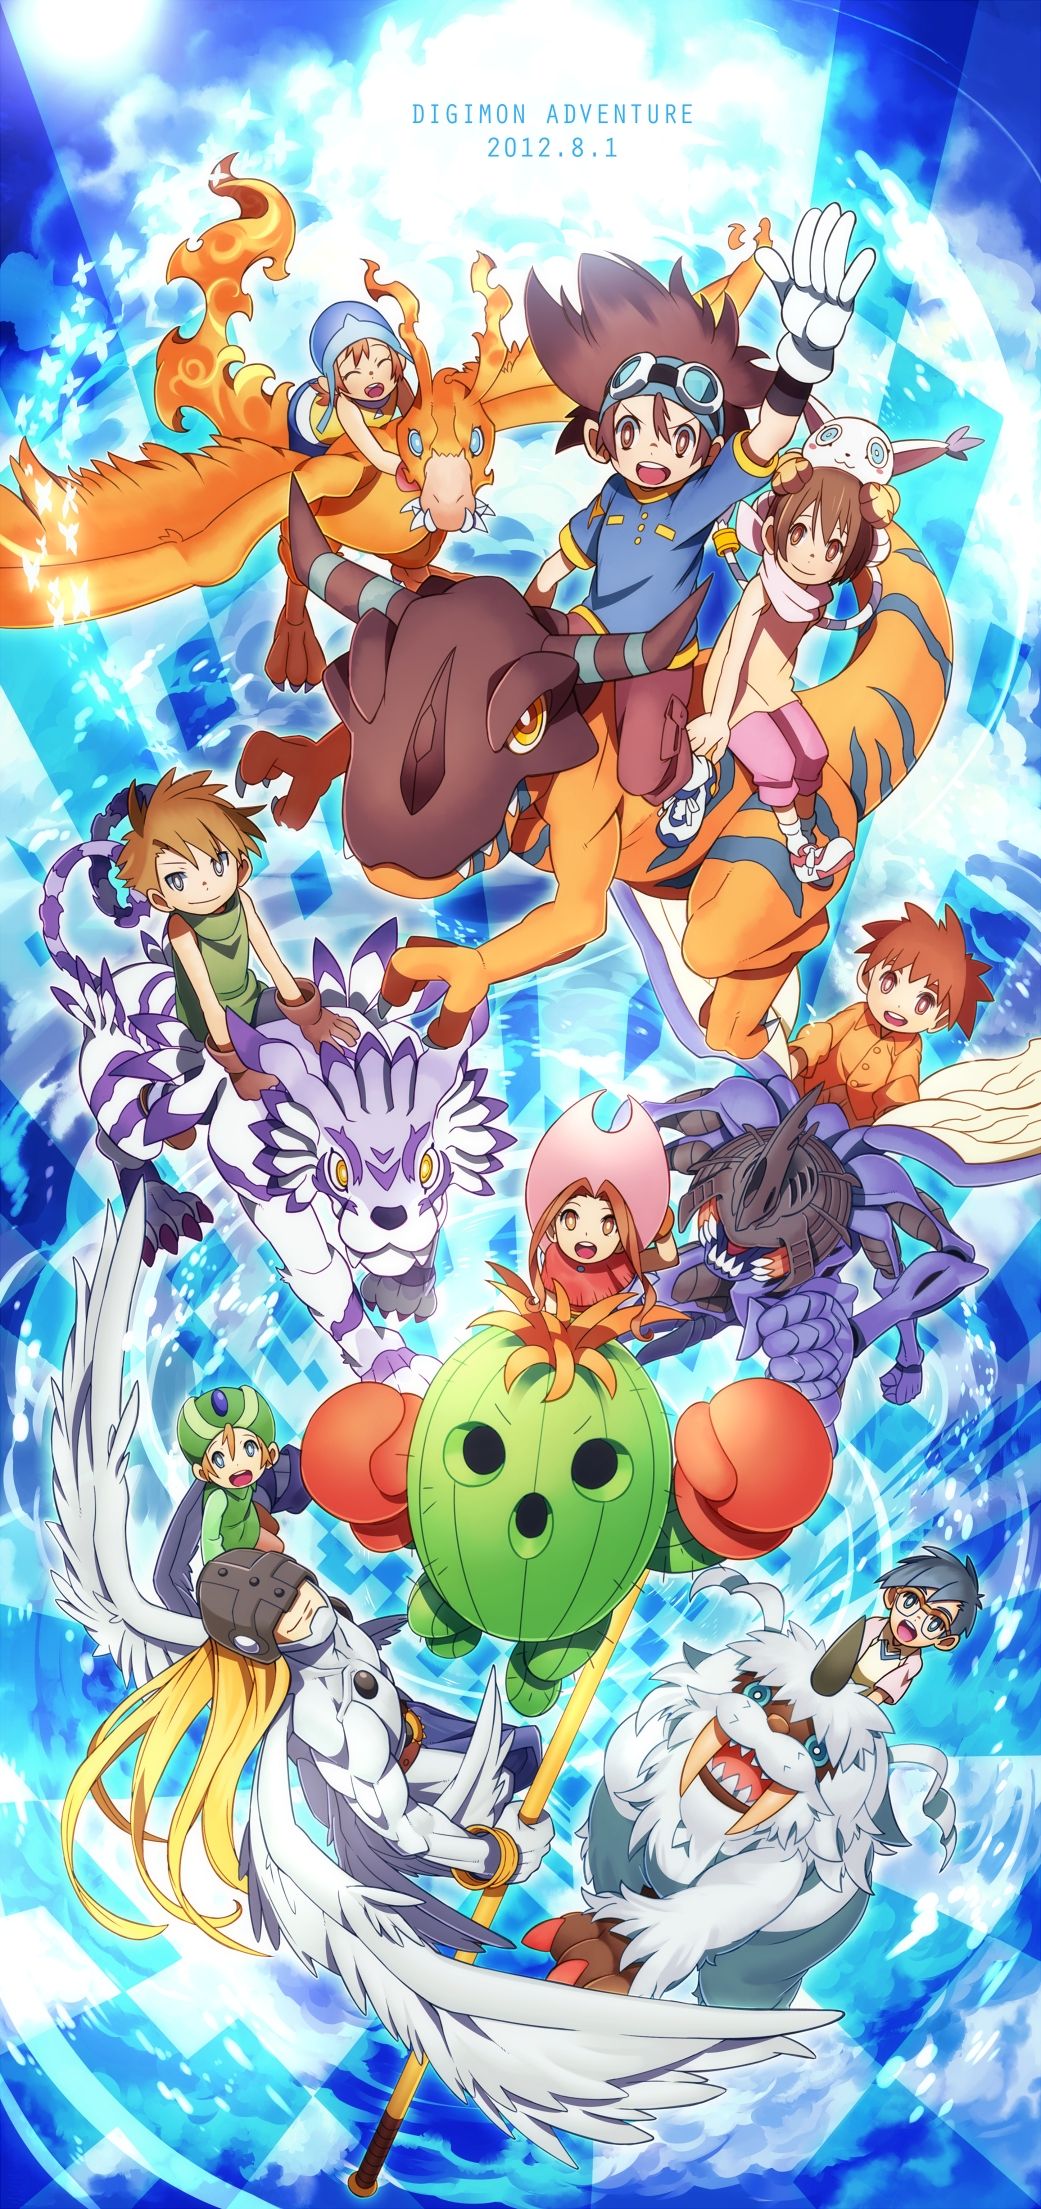 Digimon Adventure. Digimon wallpaper, Digimon, Digimon adventure